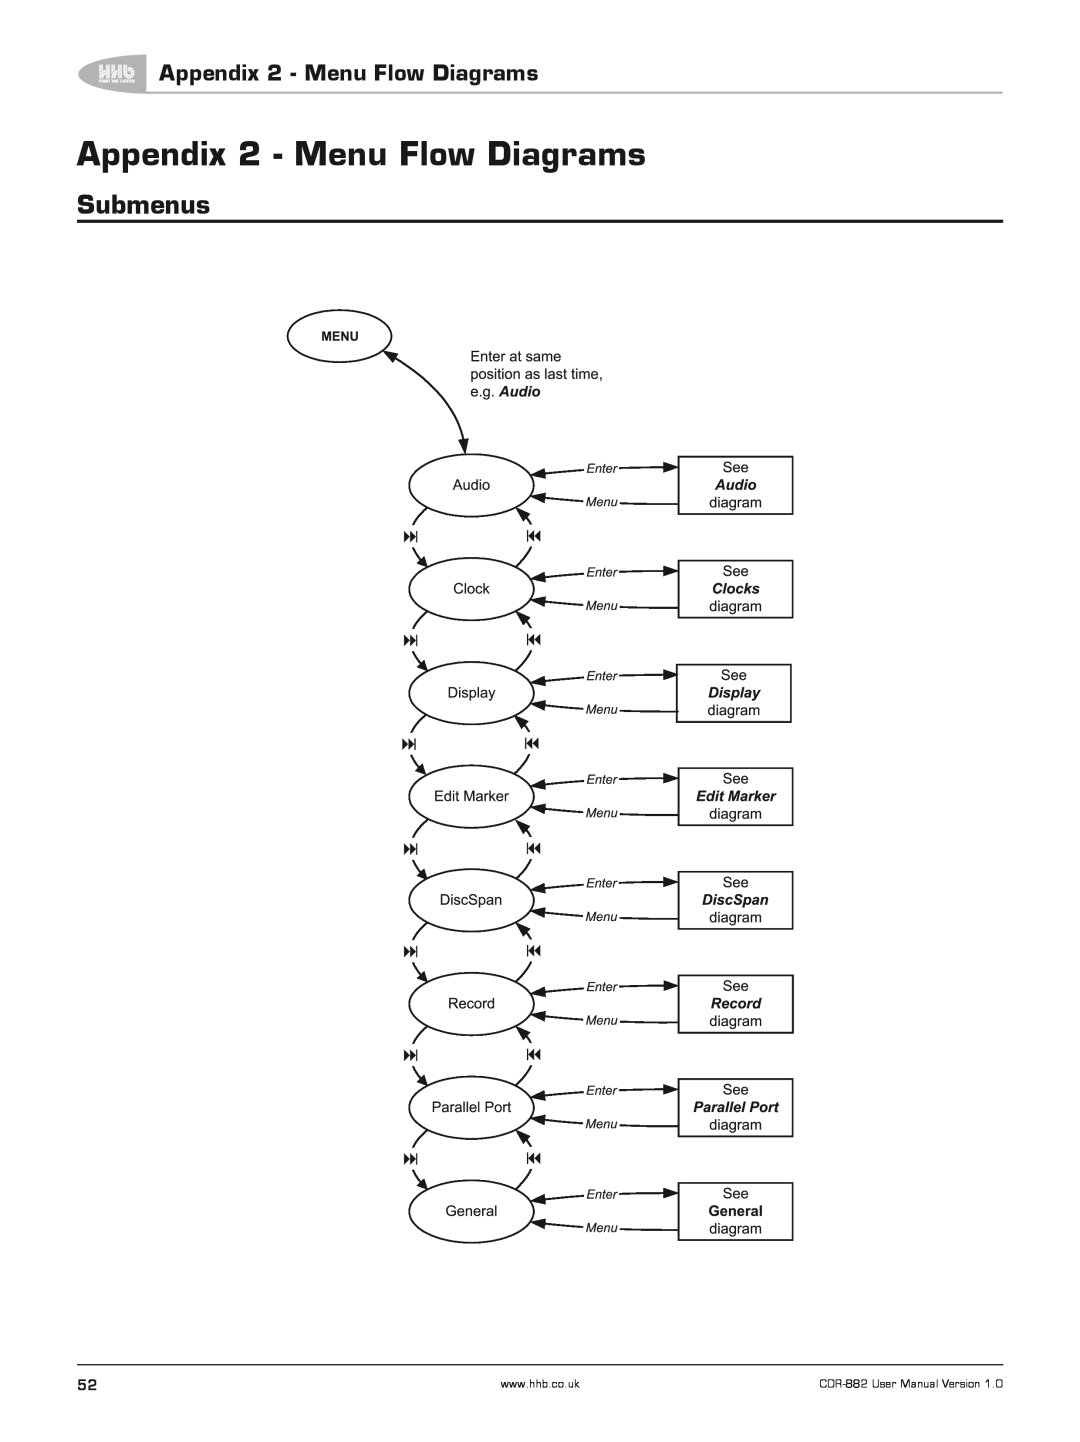 HHB comm CDR-882 user manual Appendix 2 - Menu Flow Diagrams, Submenus 